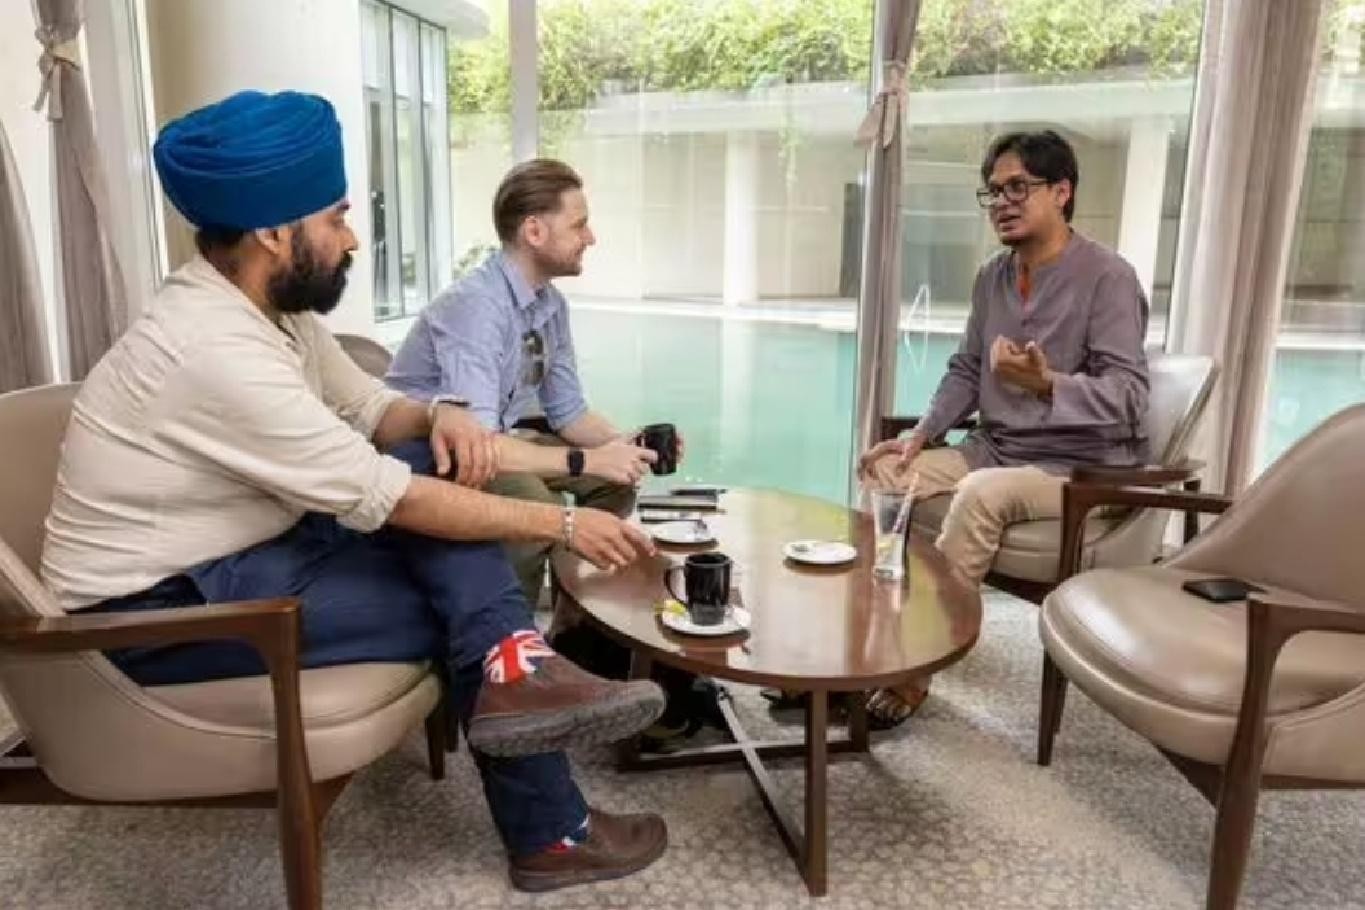 Gaurav, Abhishek, and Raj represent India's digital transformation